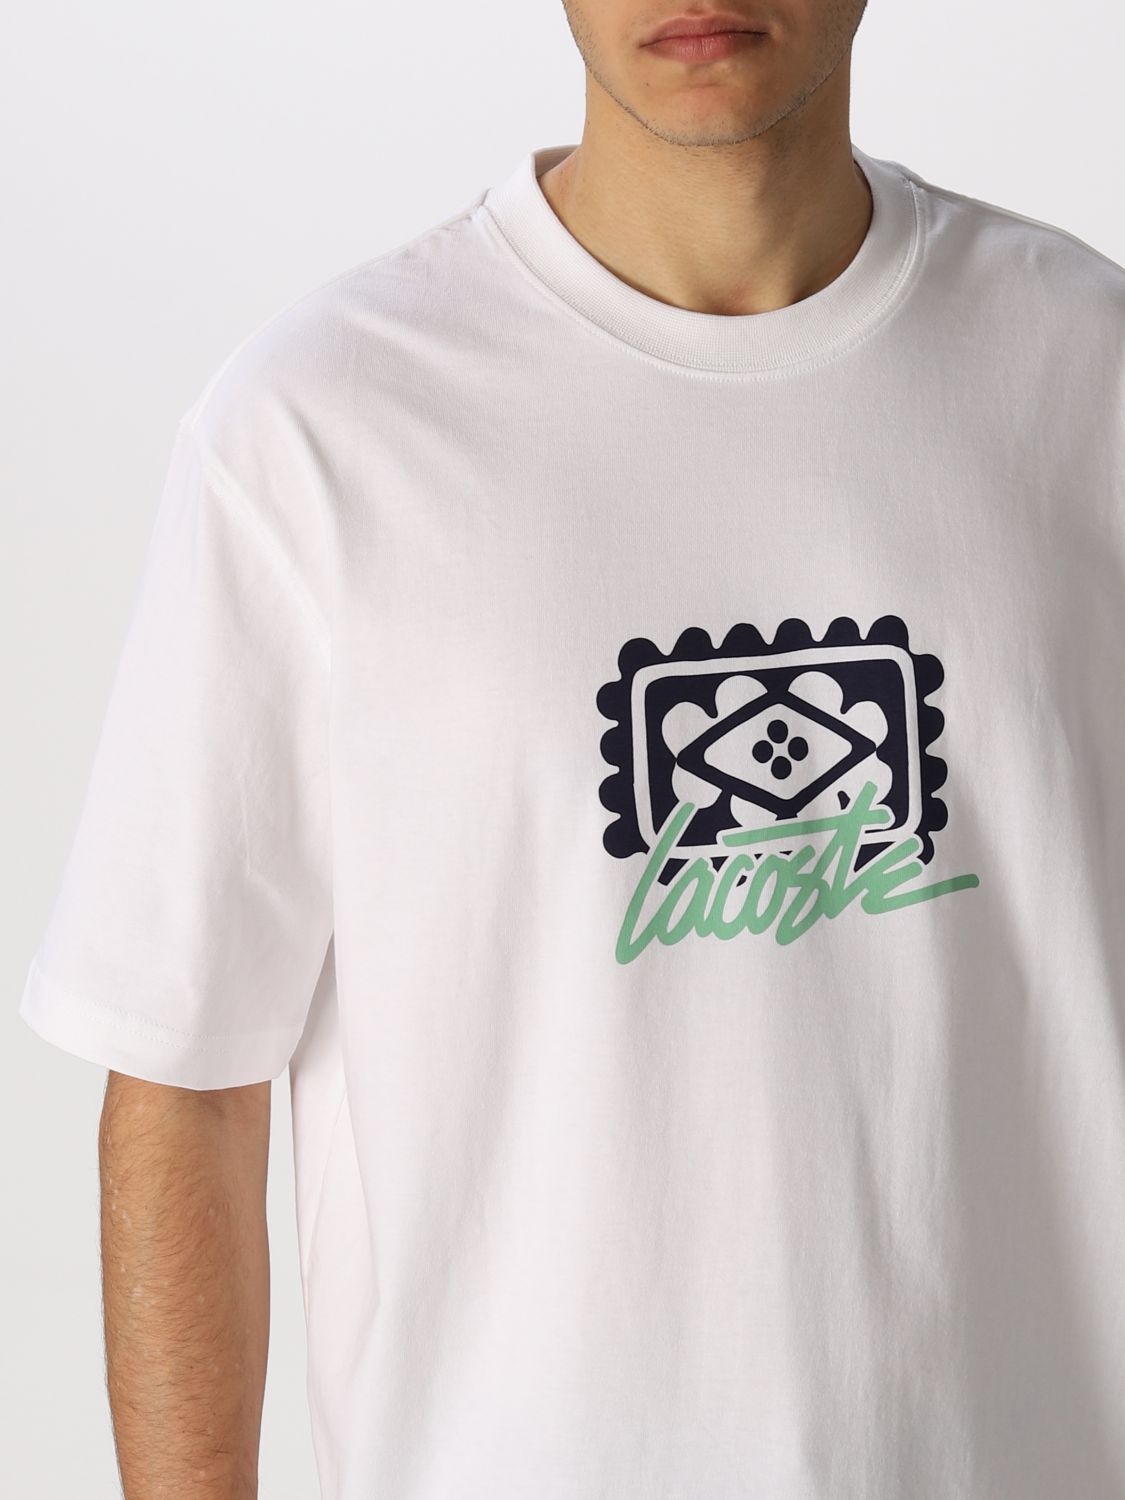 Camiseta Lacoste L!Ve: Camiseta hombre Lacoste L!ve blanco 3